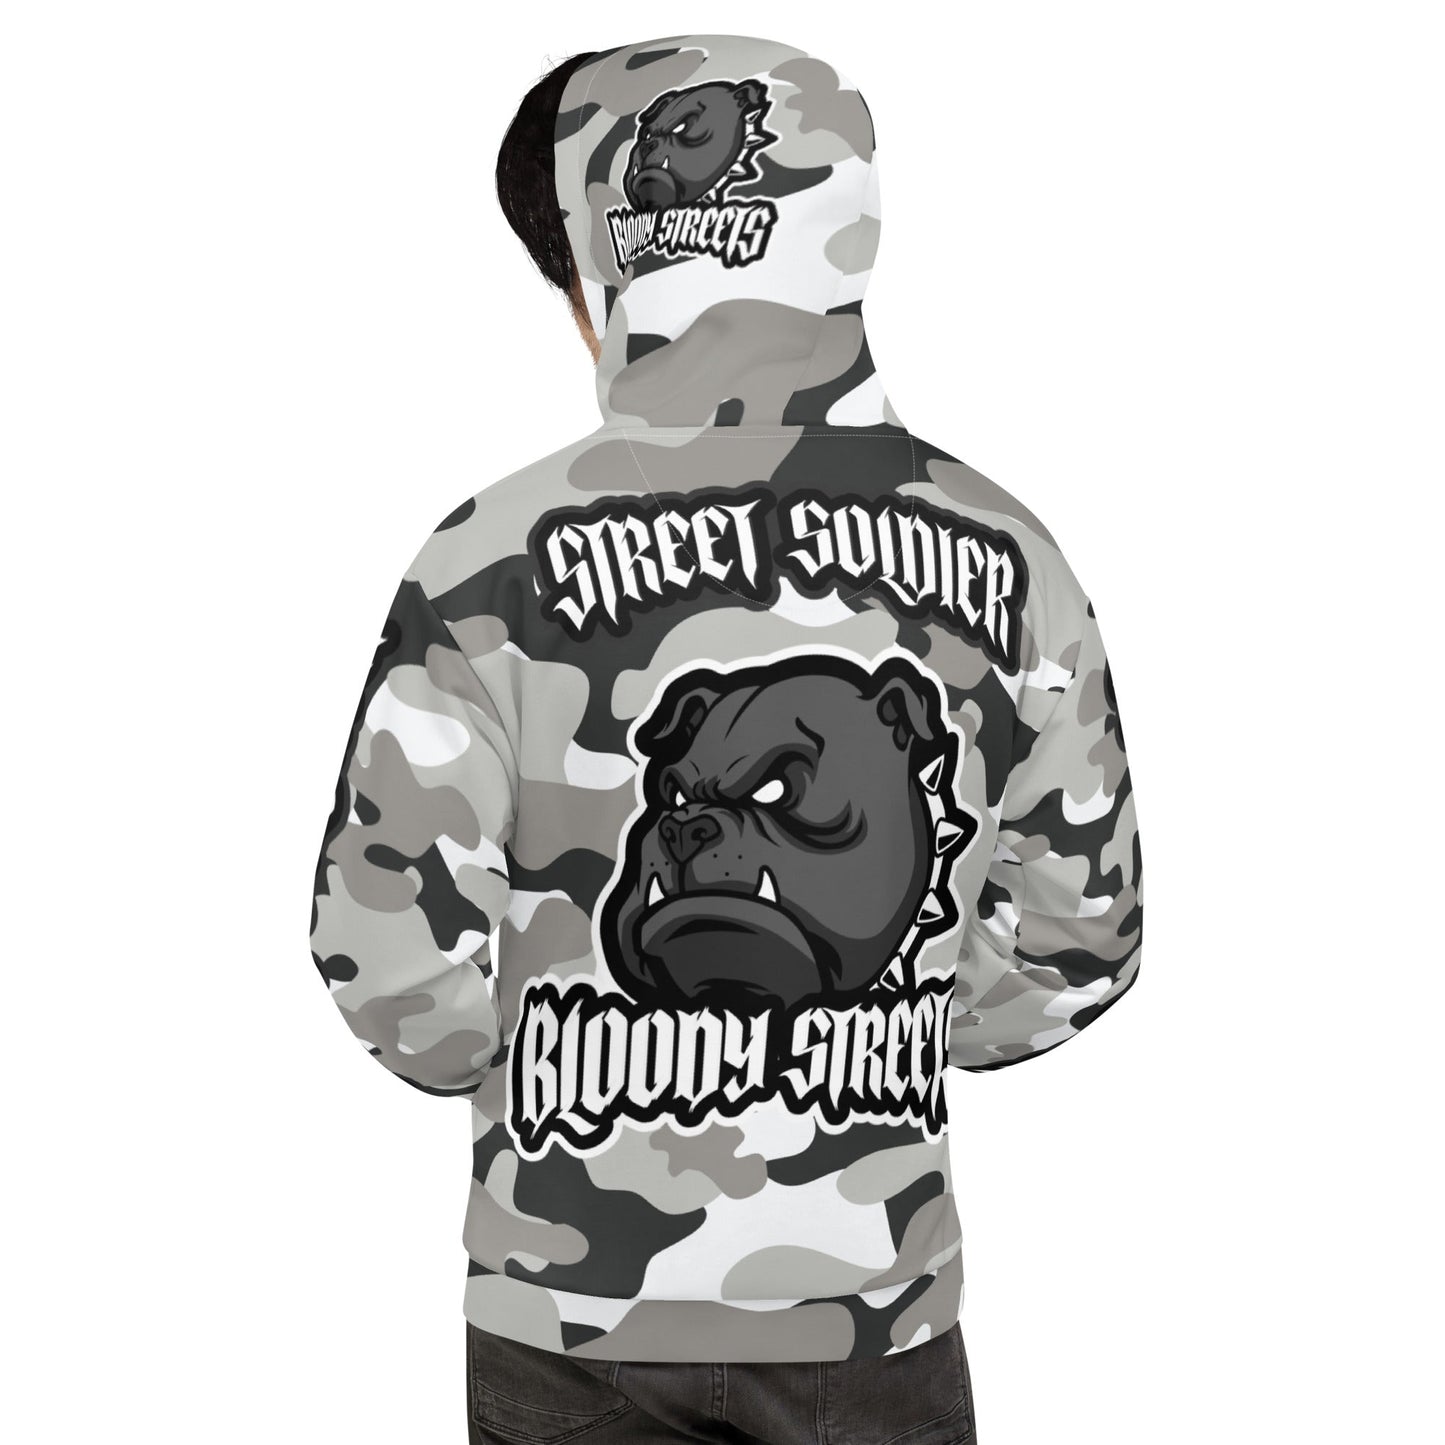 CAMOUFLAGE Bull Dog "Street Soldier" Unisex Hoodie - BLOODY-STREETS.DE Streetwear Herren und Damen Hoodies, T-Shirts, Pullis